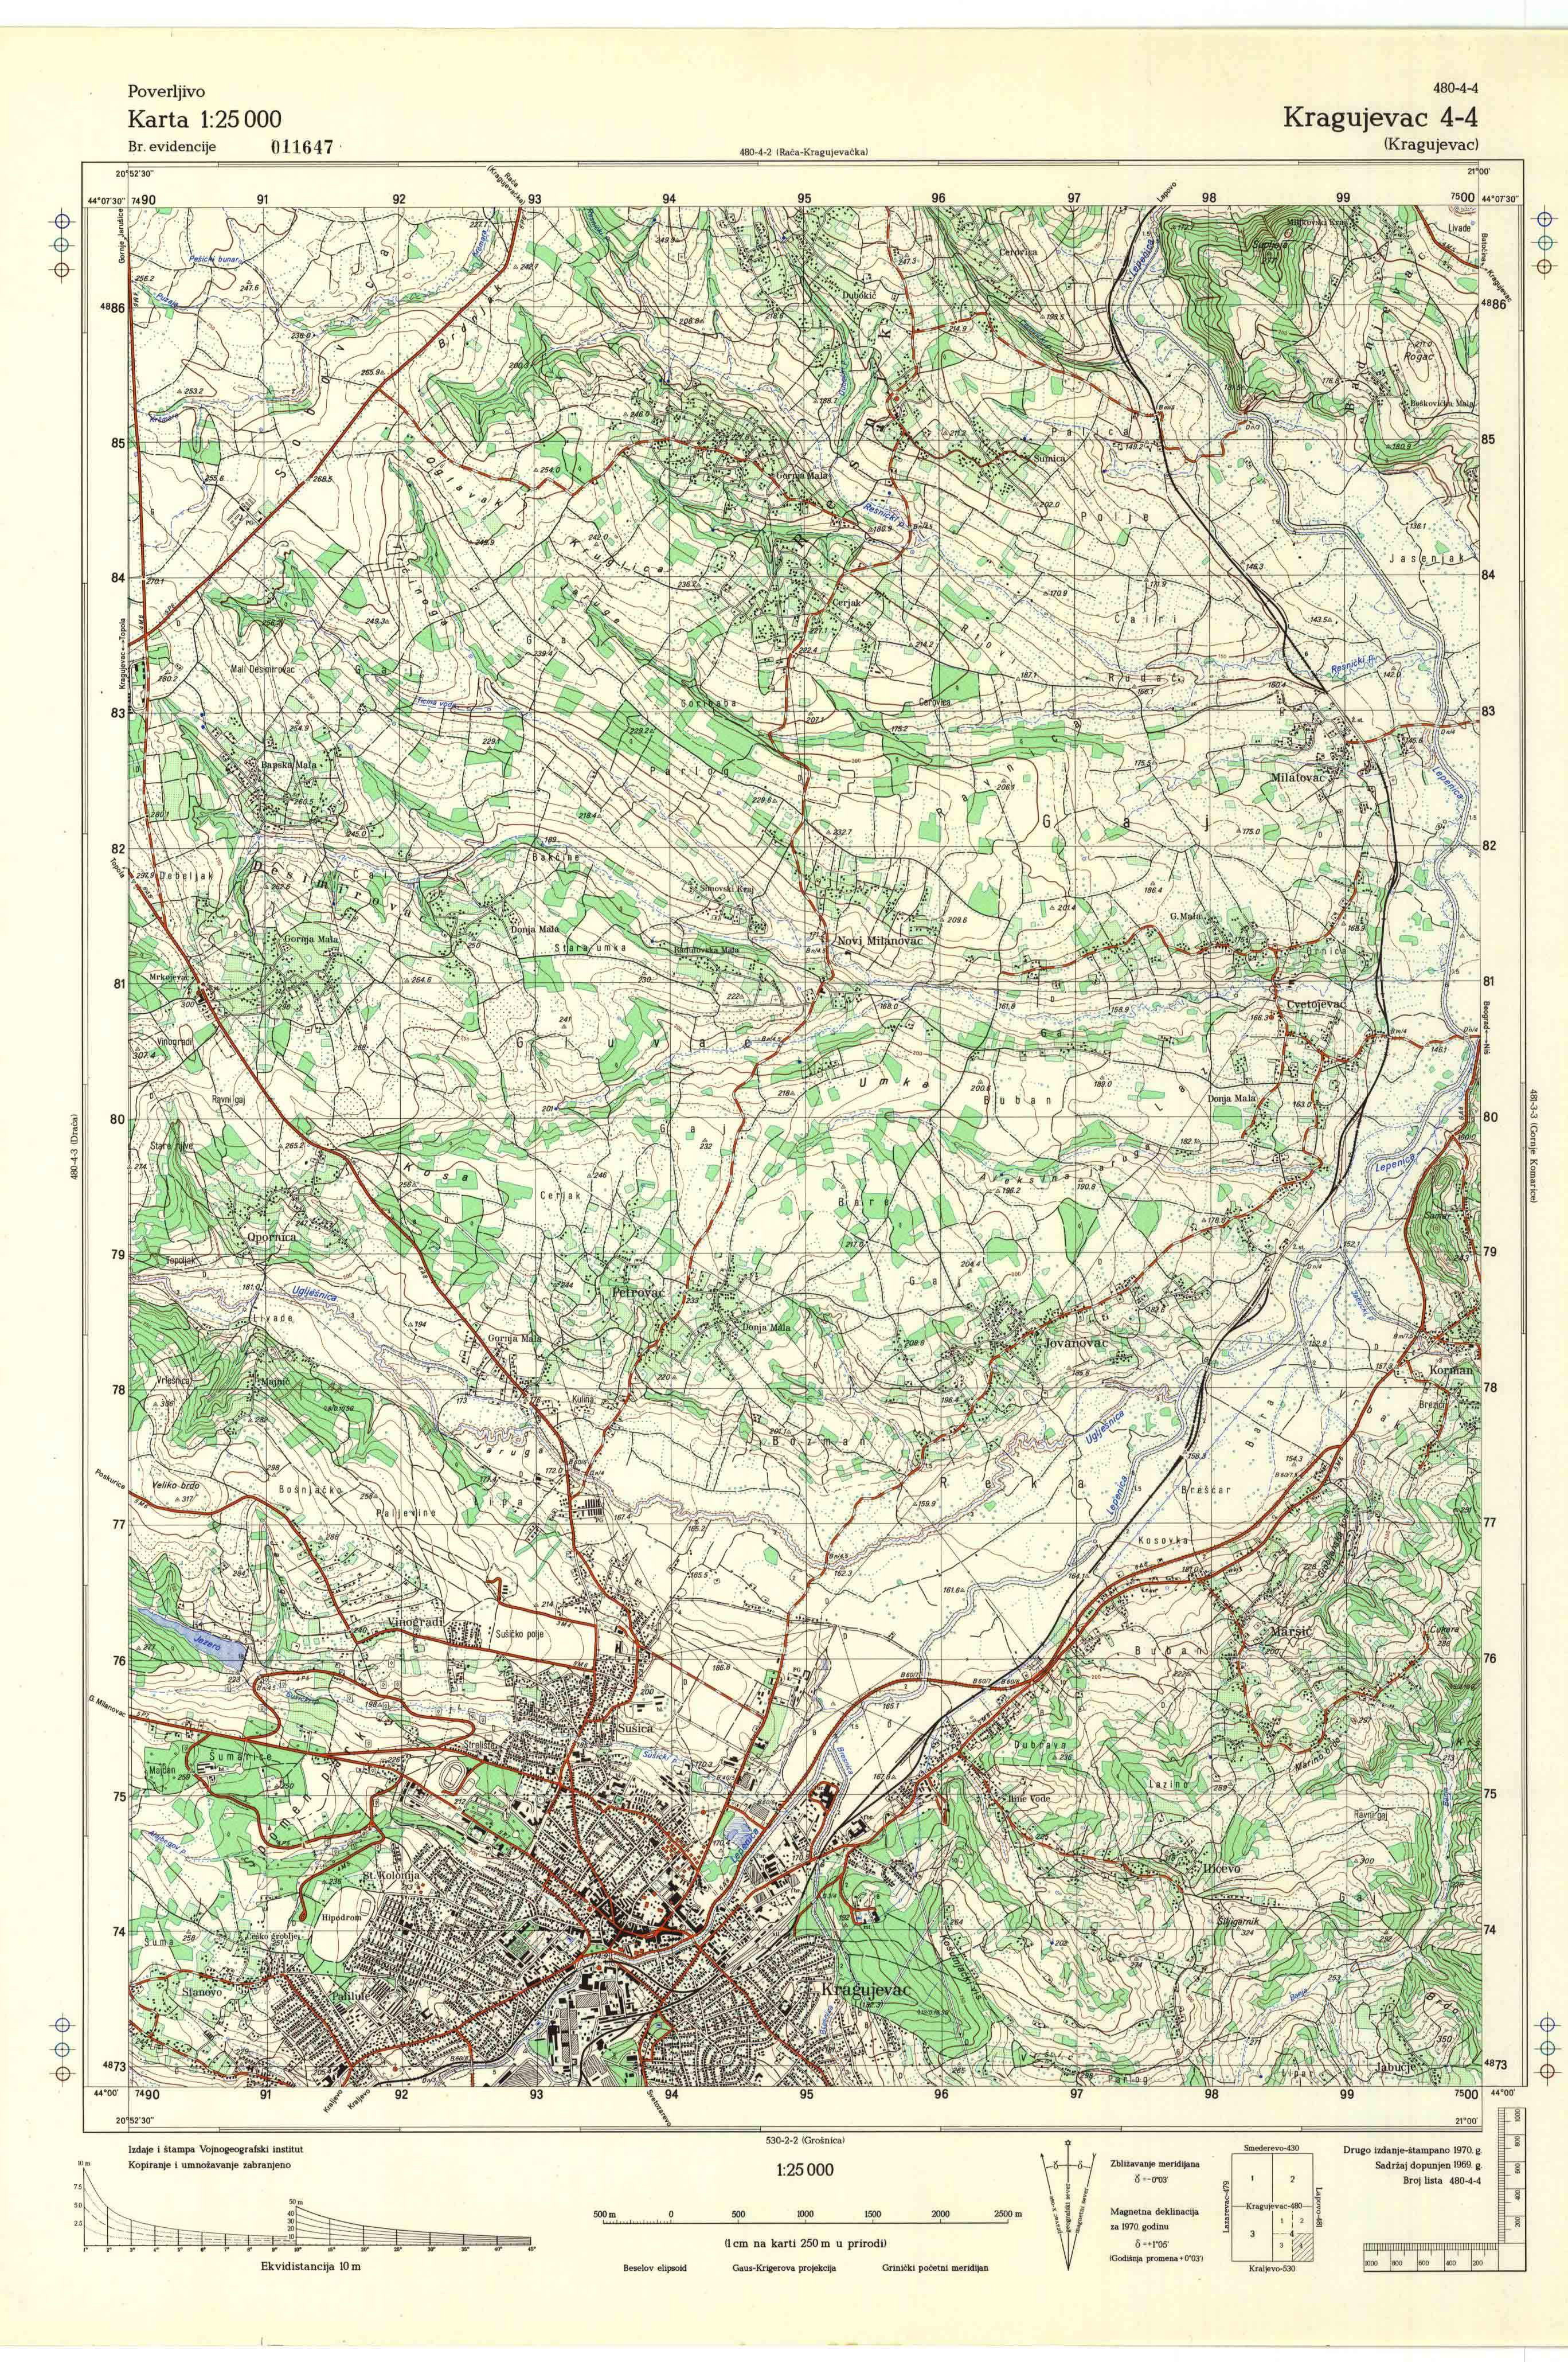  topografska karta srbije 25000 JNA  Kragujevac